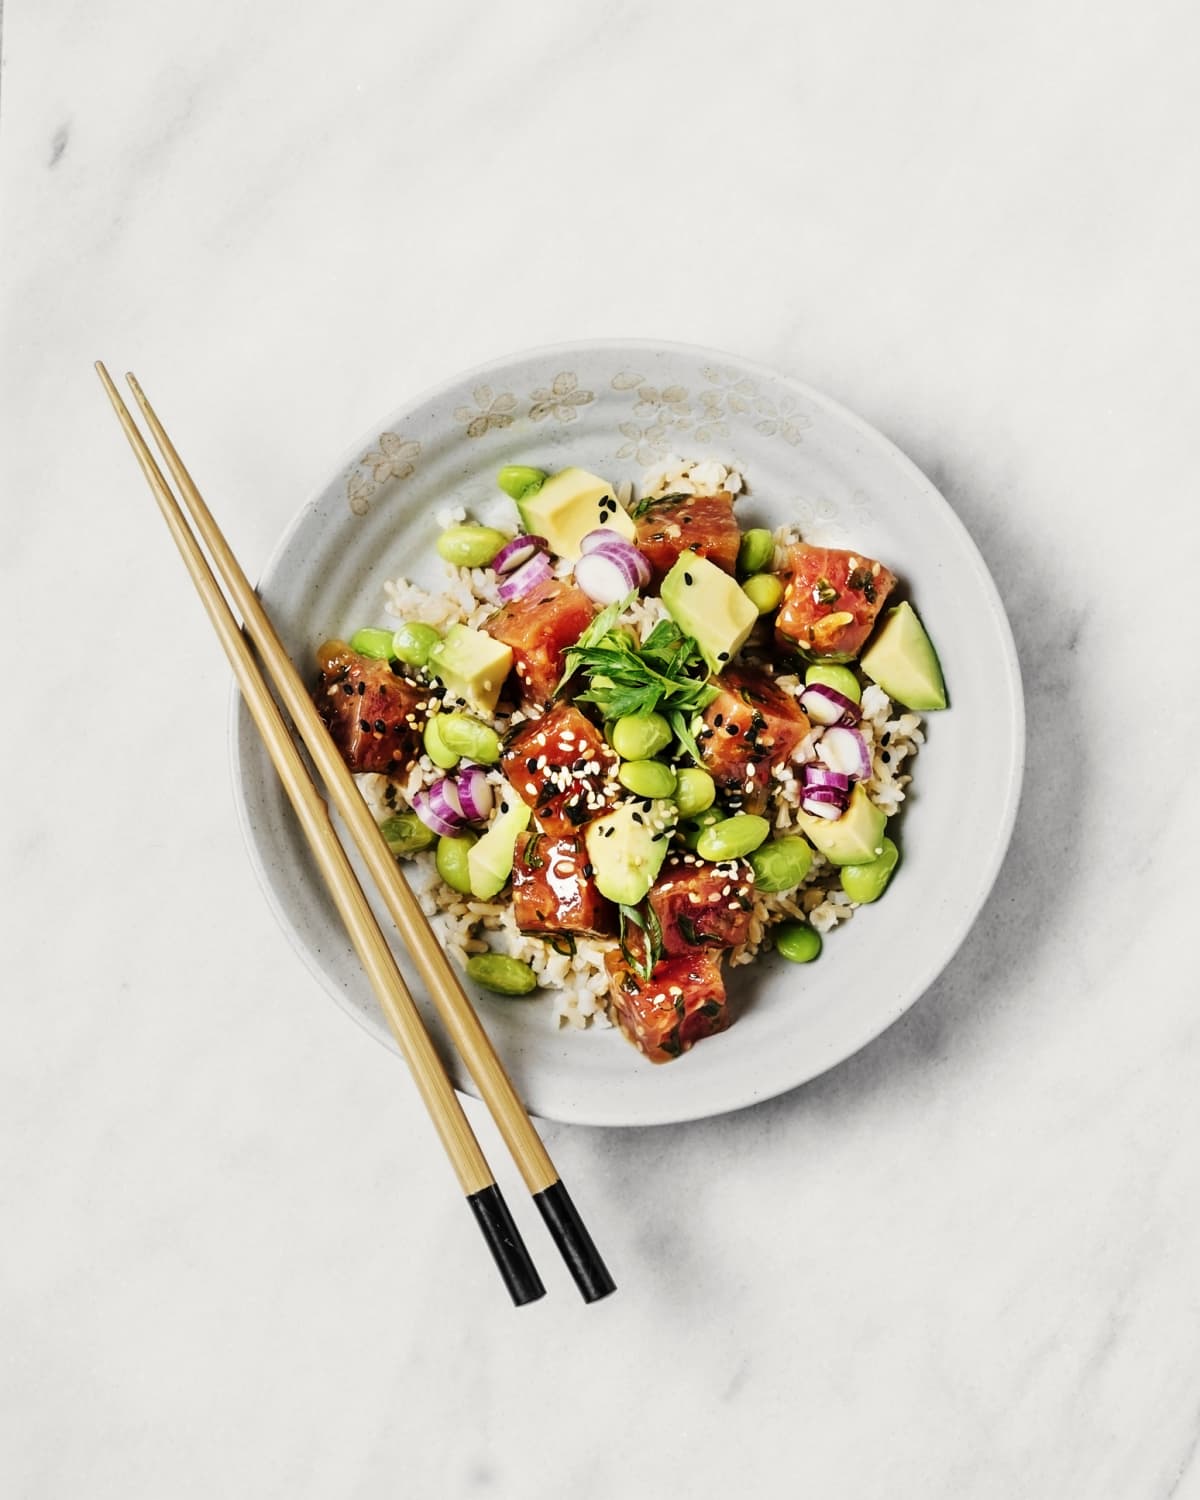 Tuna and avocado poke bowl on white background with chopsticks